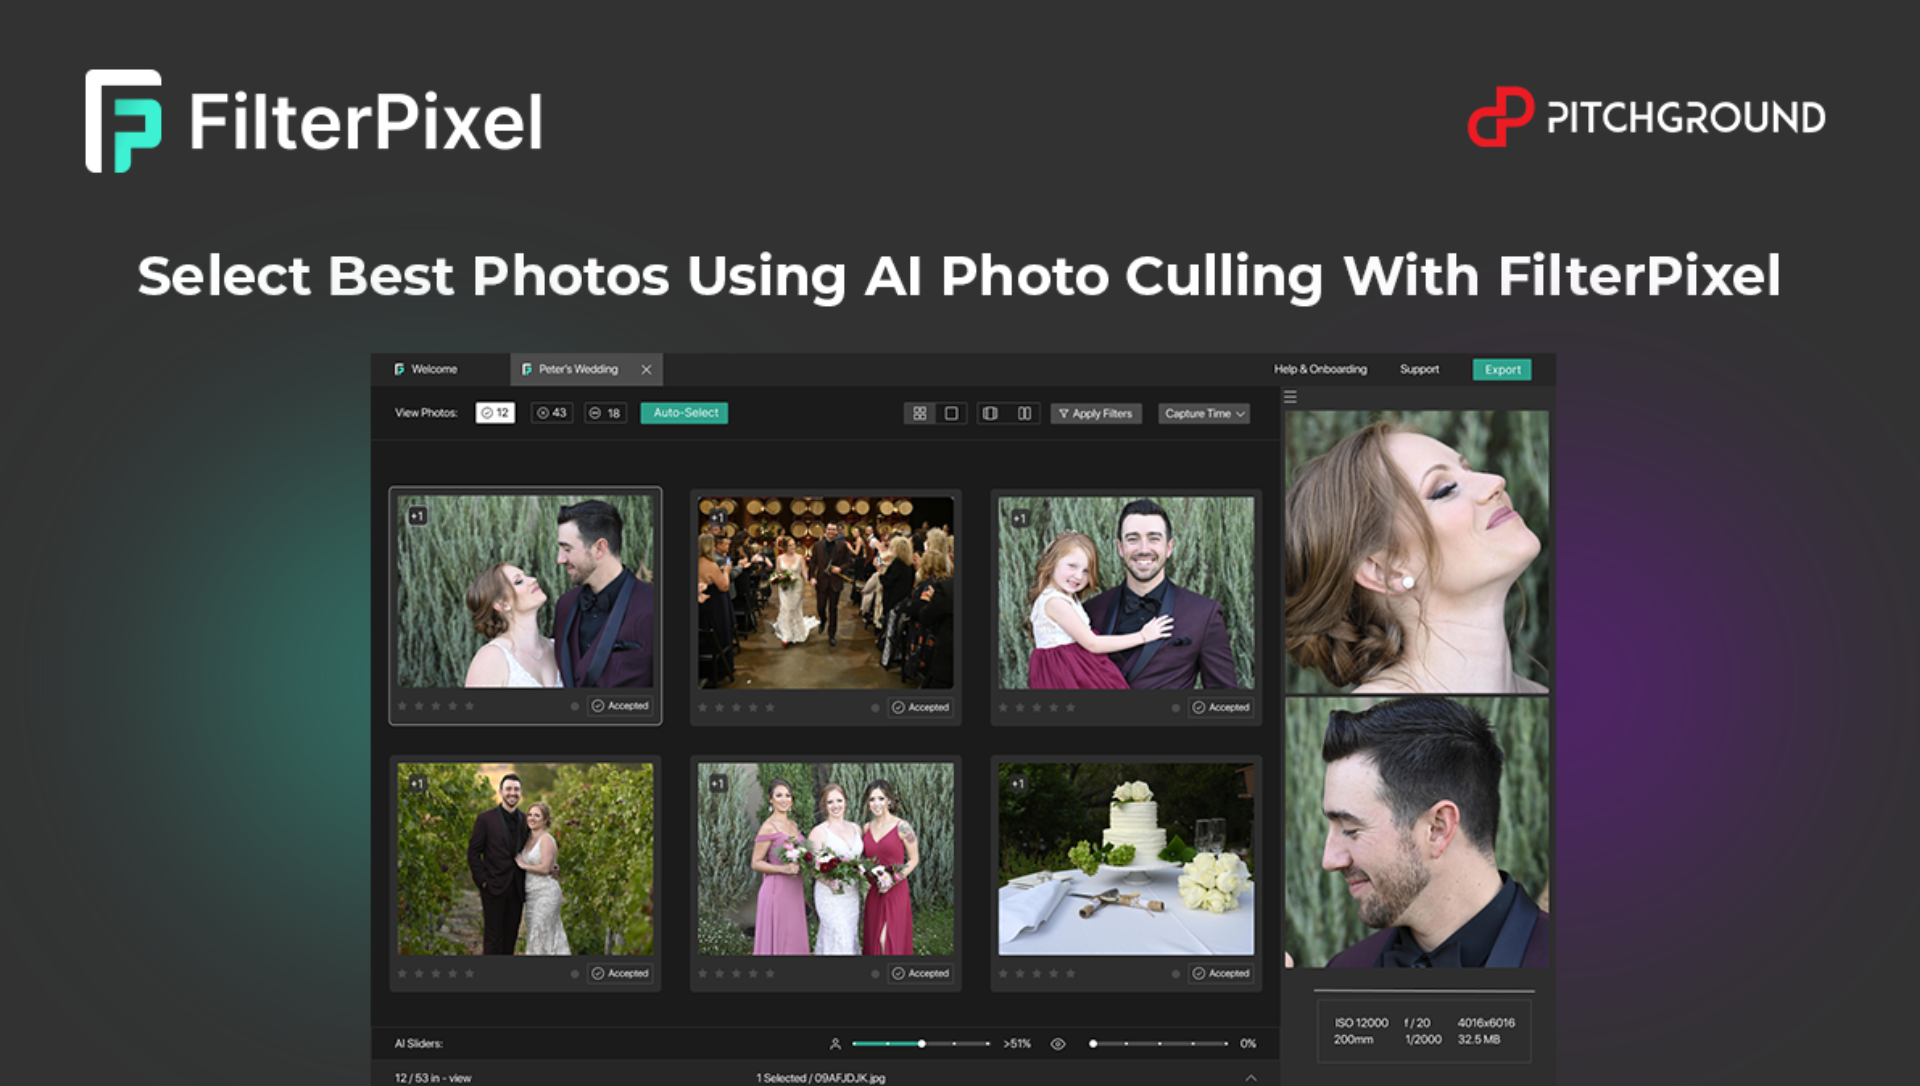 Lifetime Deal to FilterPixel: Plan C (20K Photo Limit) for $197